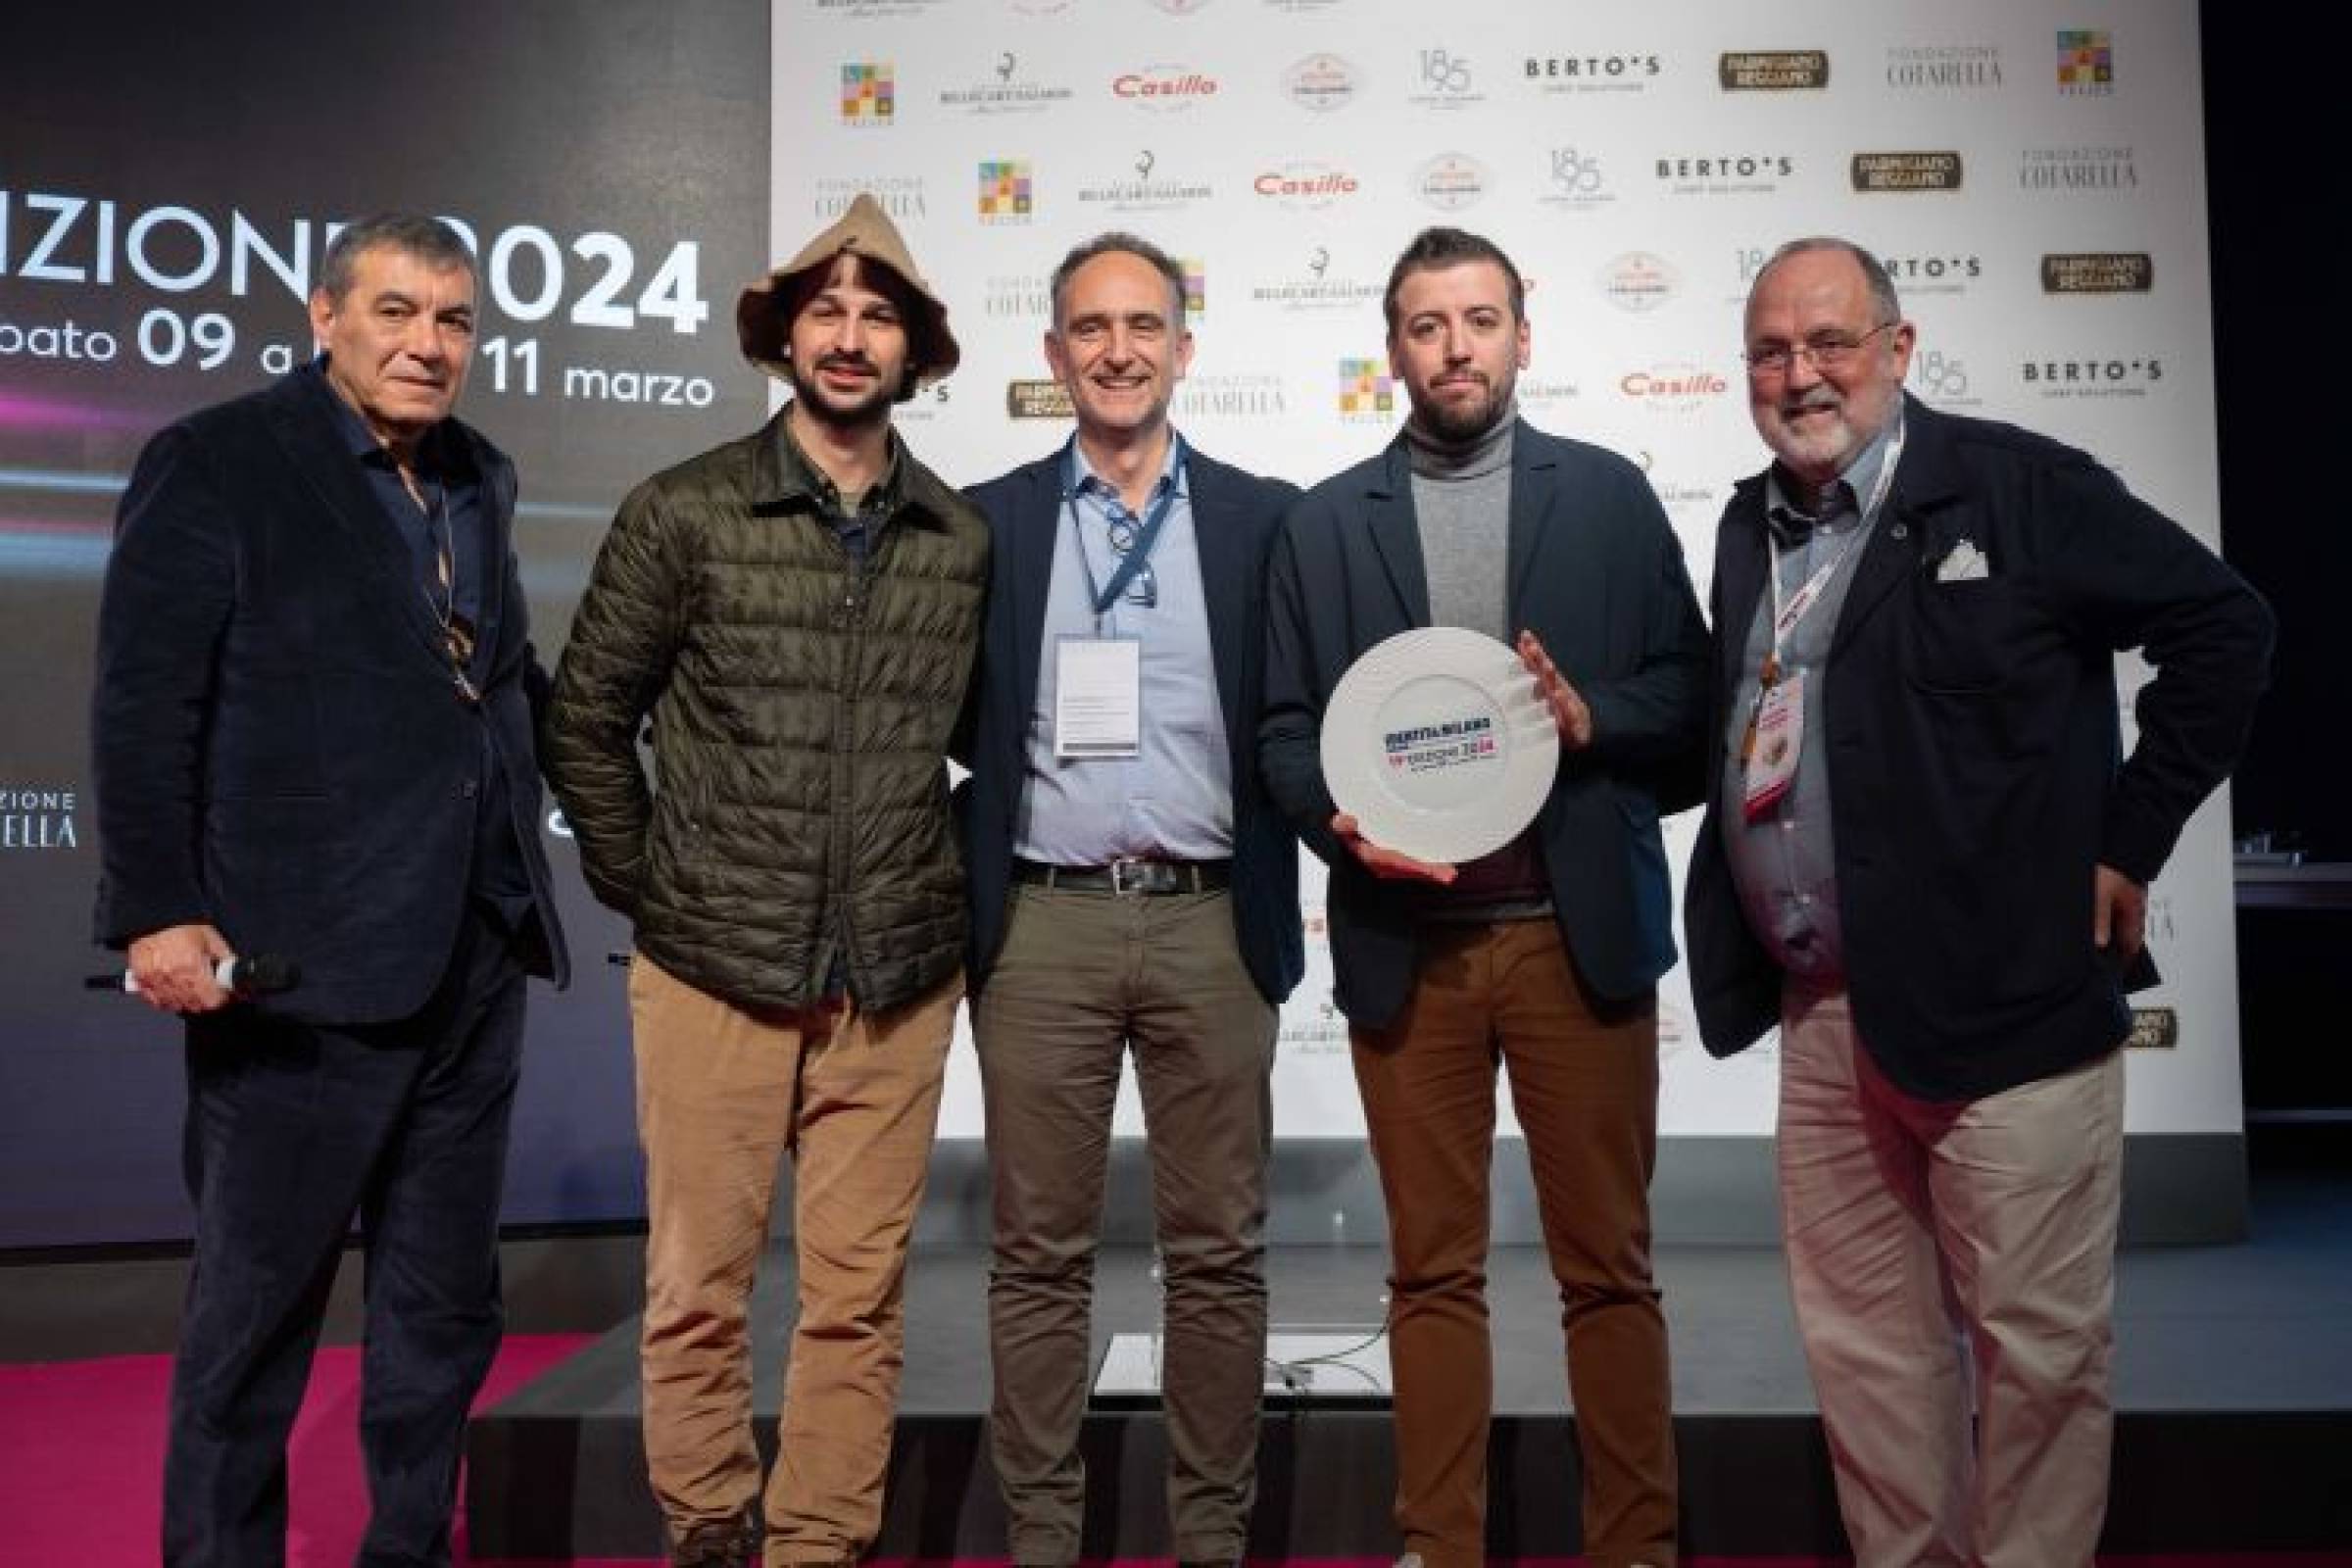 Agriturismo Ferdy gets Identità Golose's "Eccellenze Italiane" award